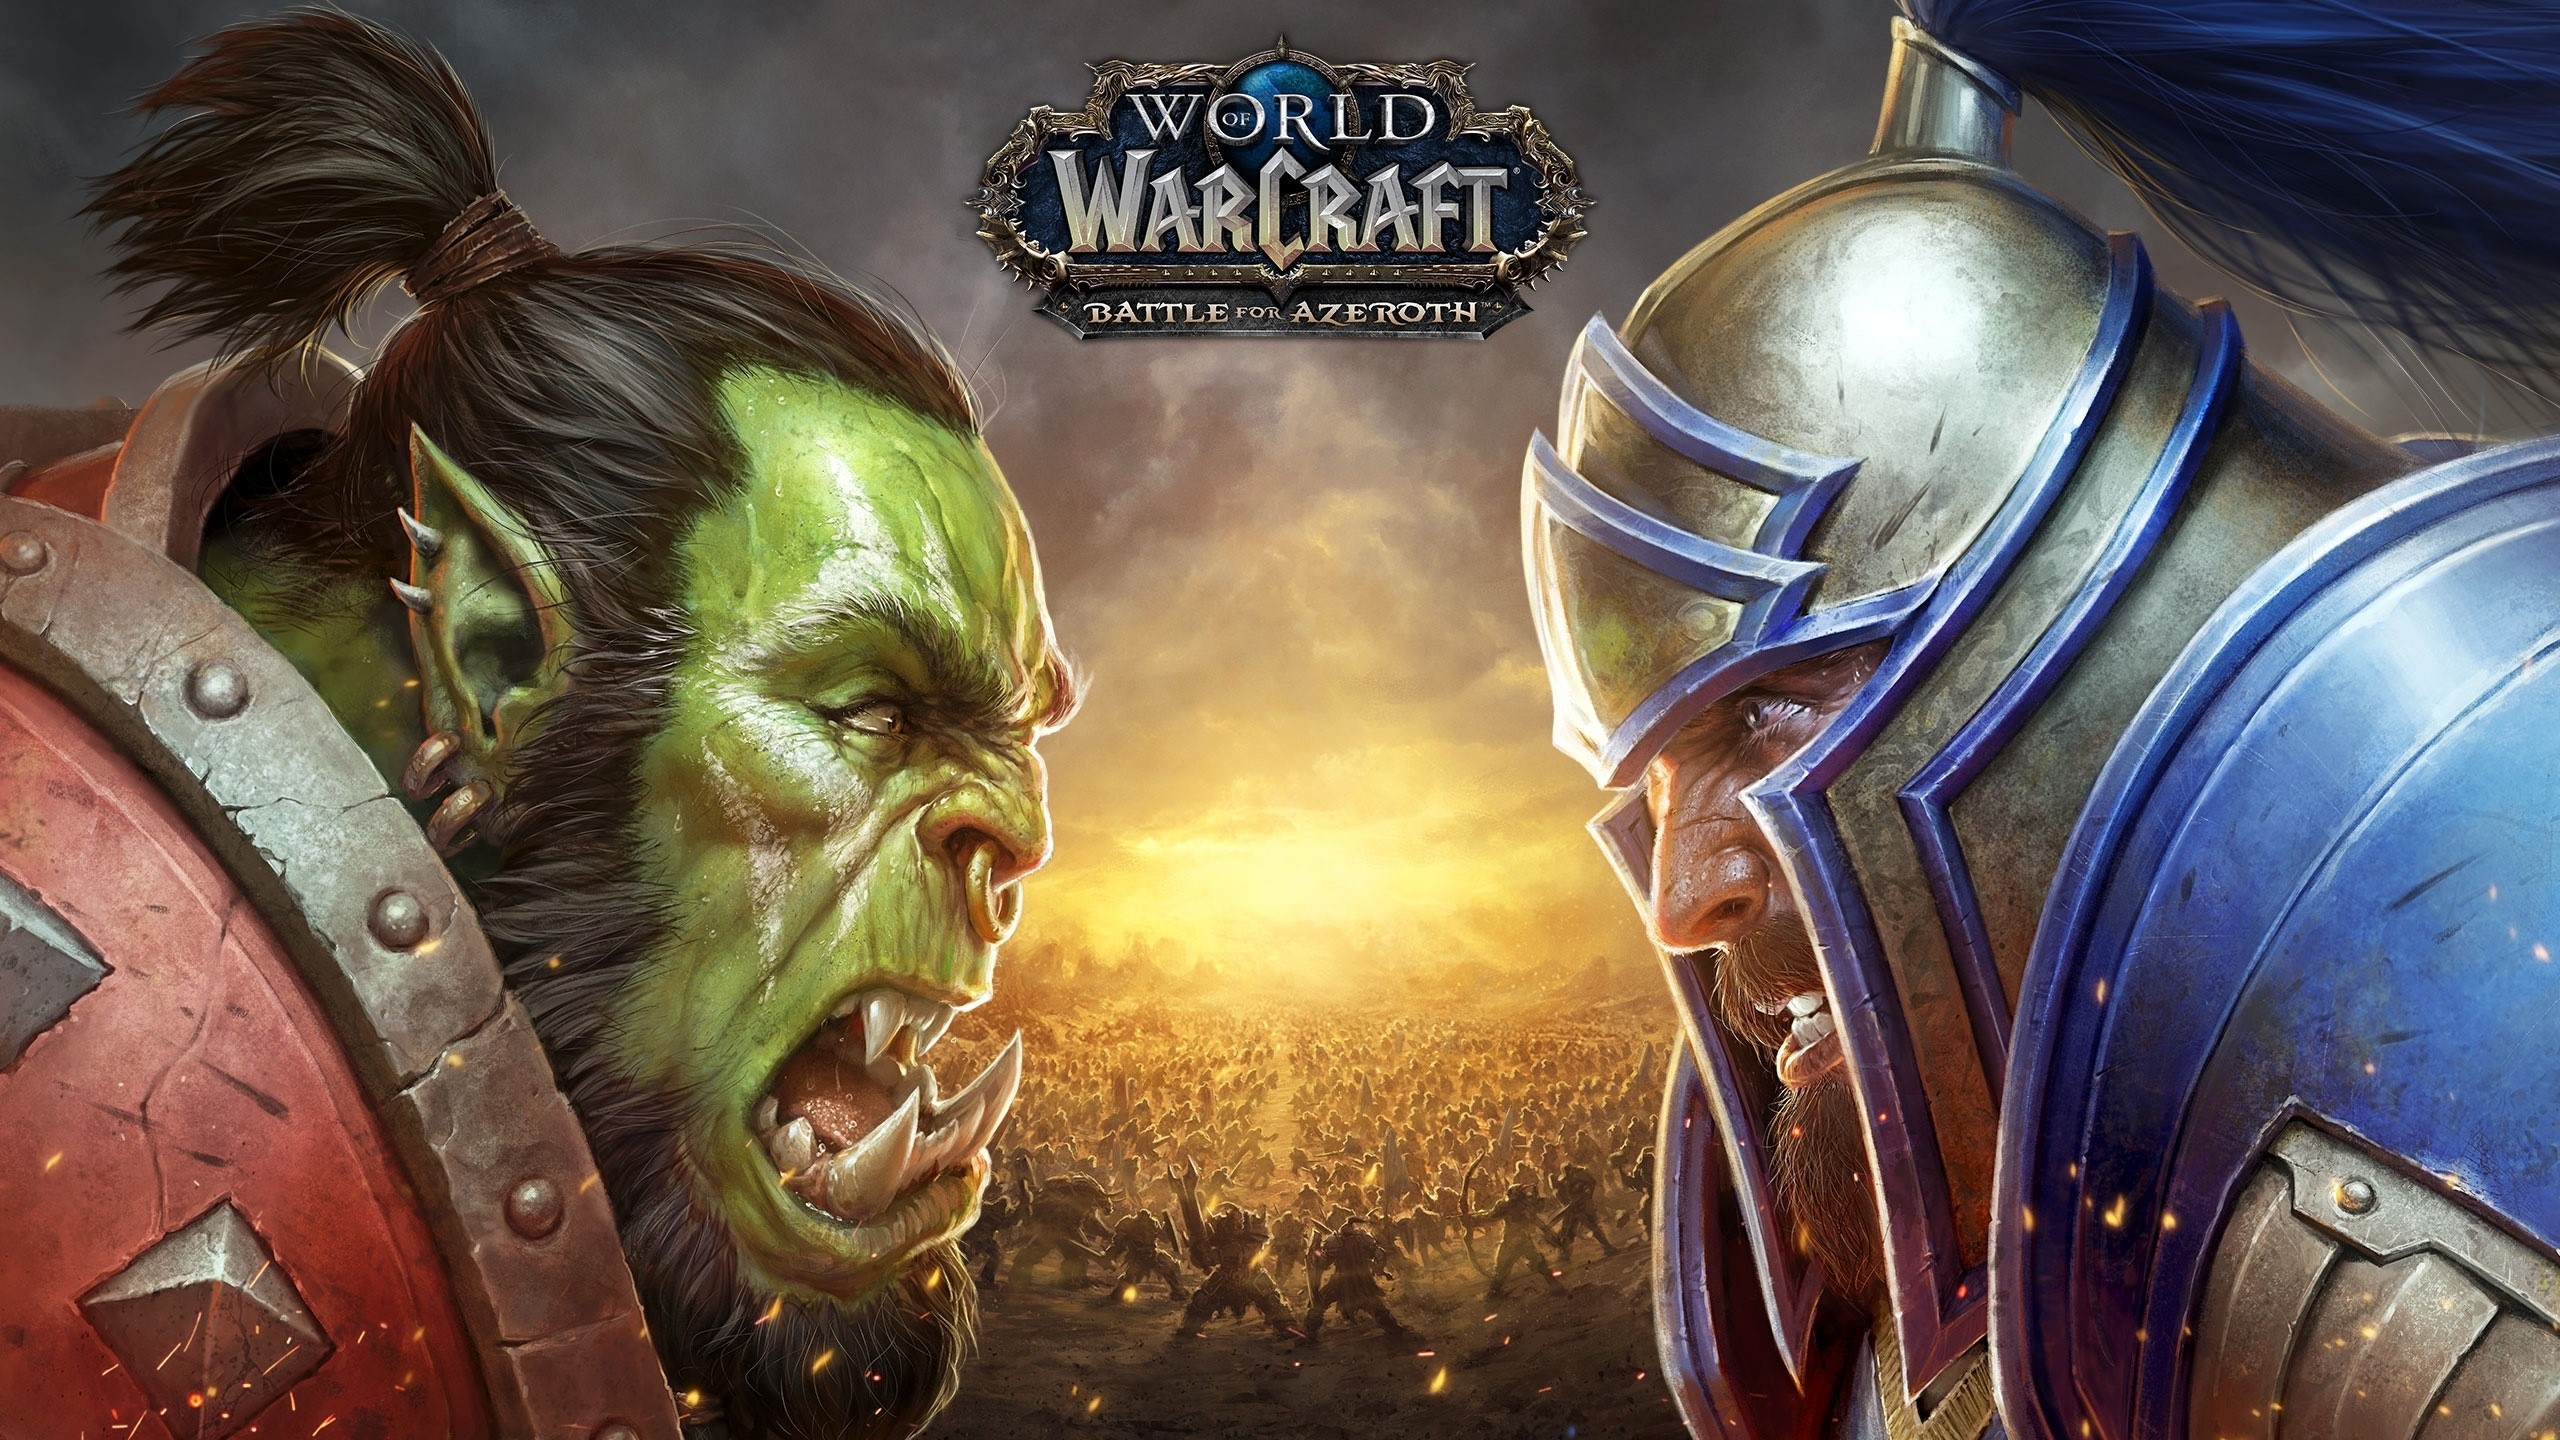 WoW: Battle for Azeroth+LVL 110 Blizzard key💳0% fees